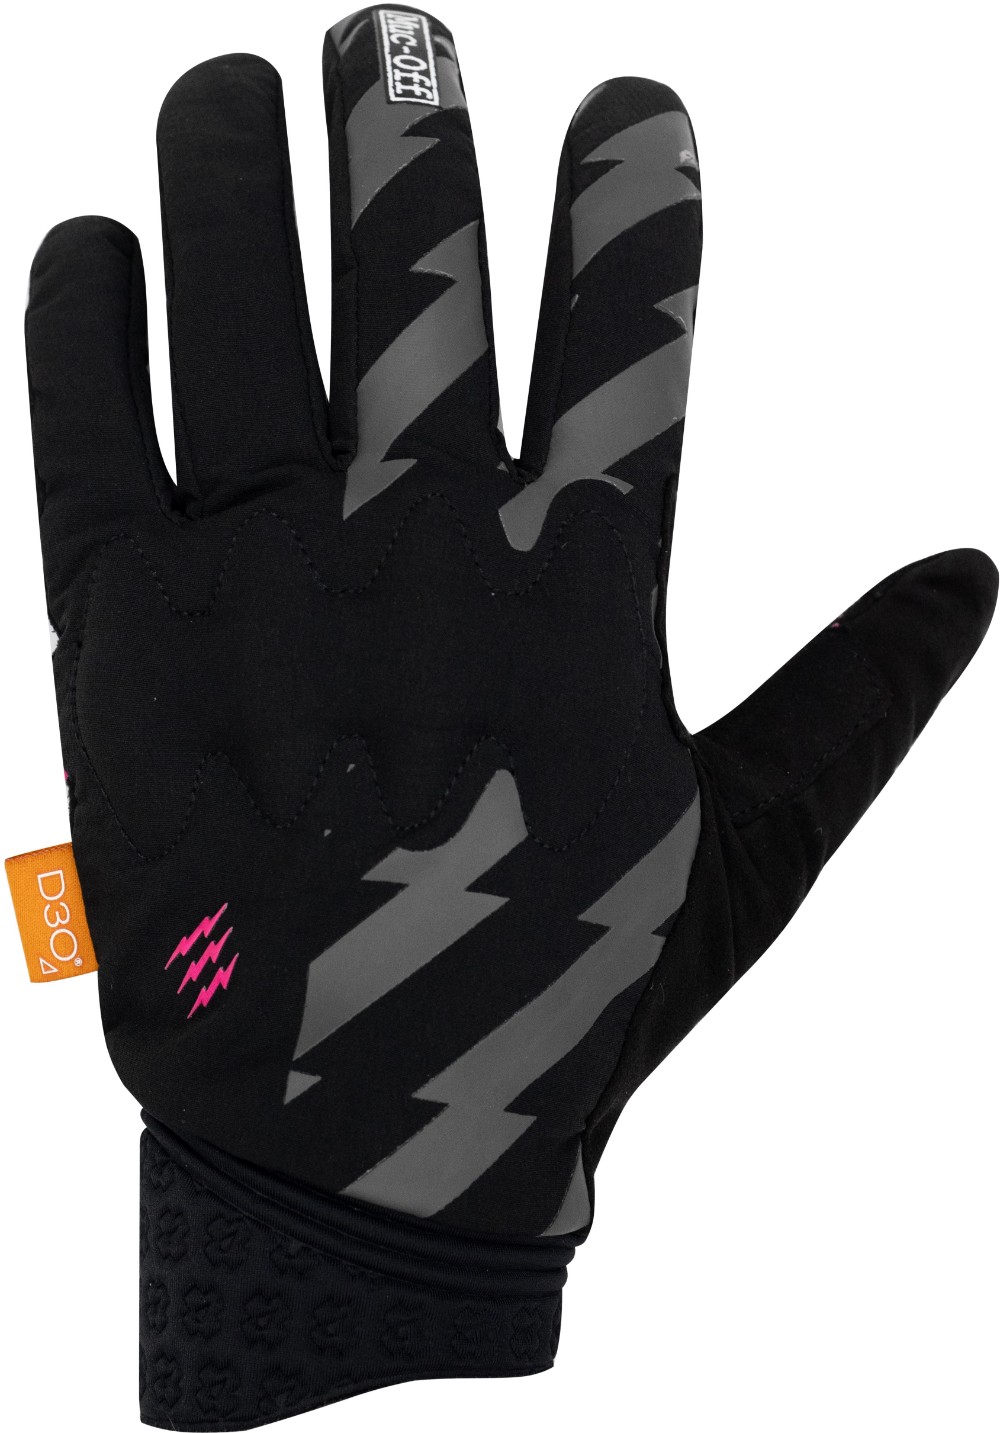 D30 Long Finger Gloves image 0